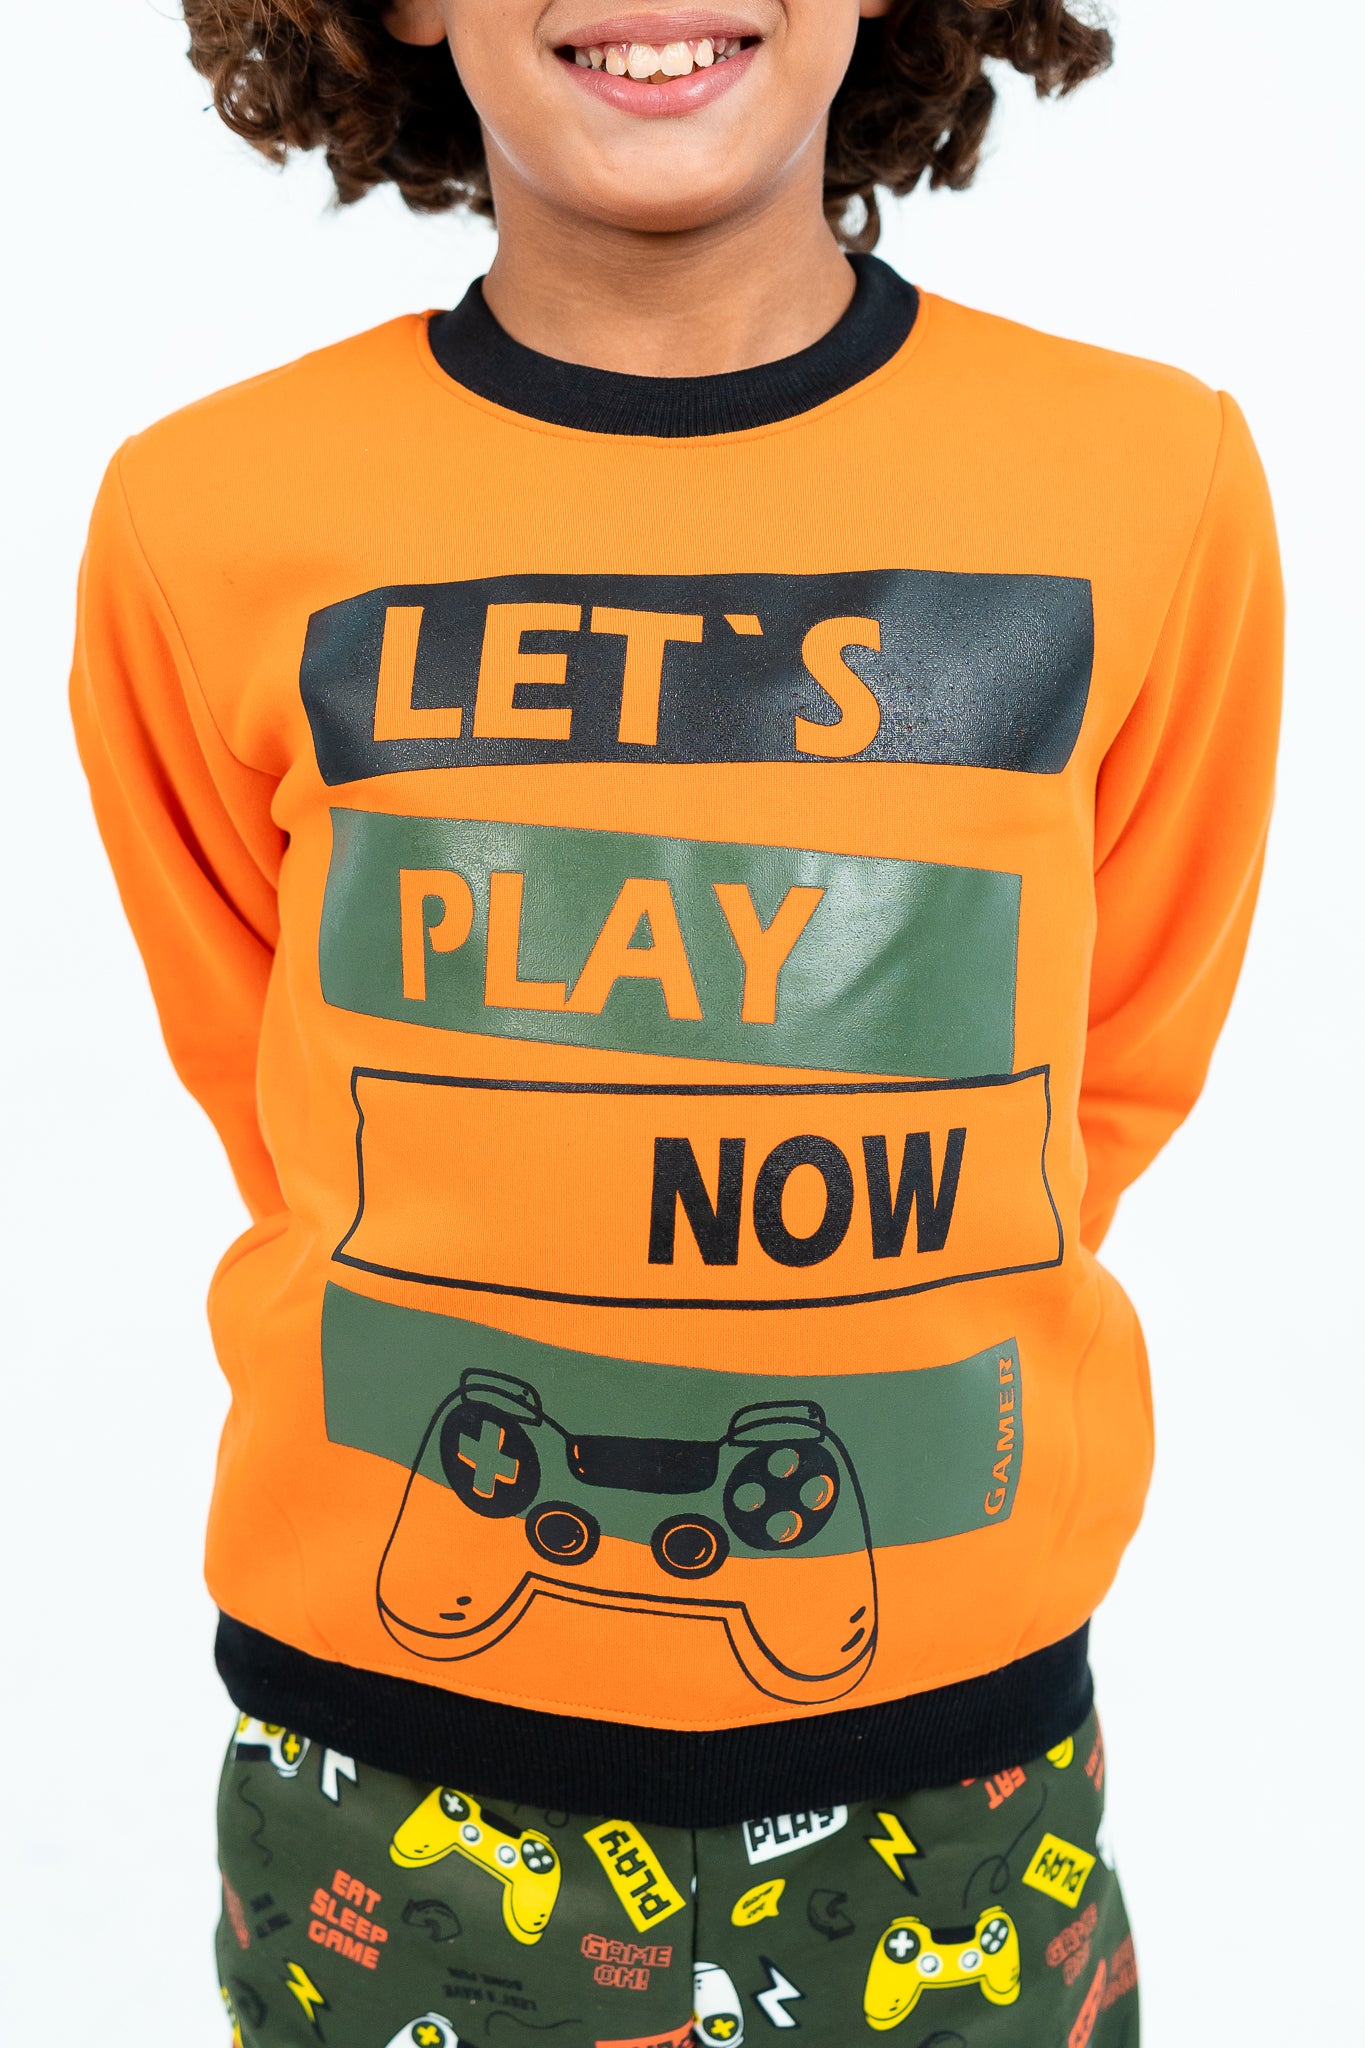 Boy's winter Orange pajamas with PlayStation printed - allover